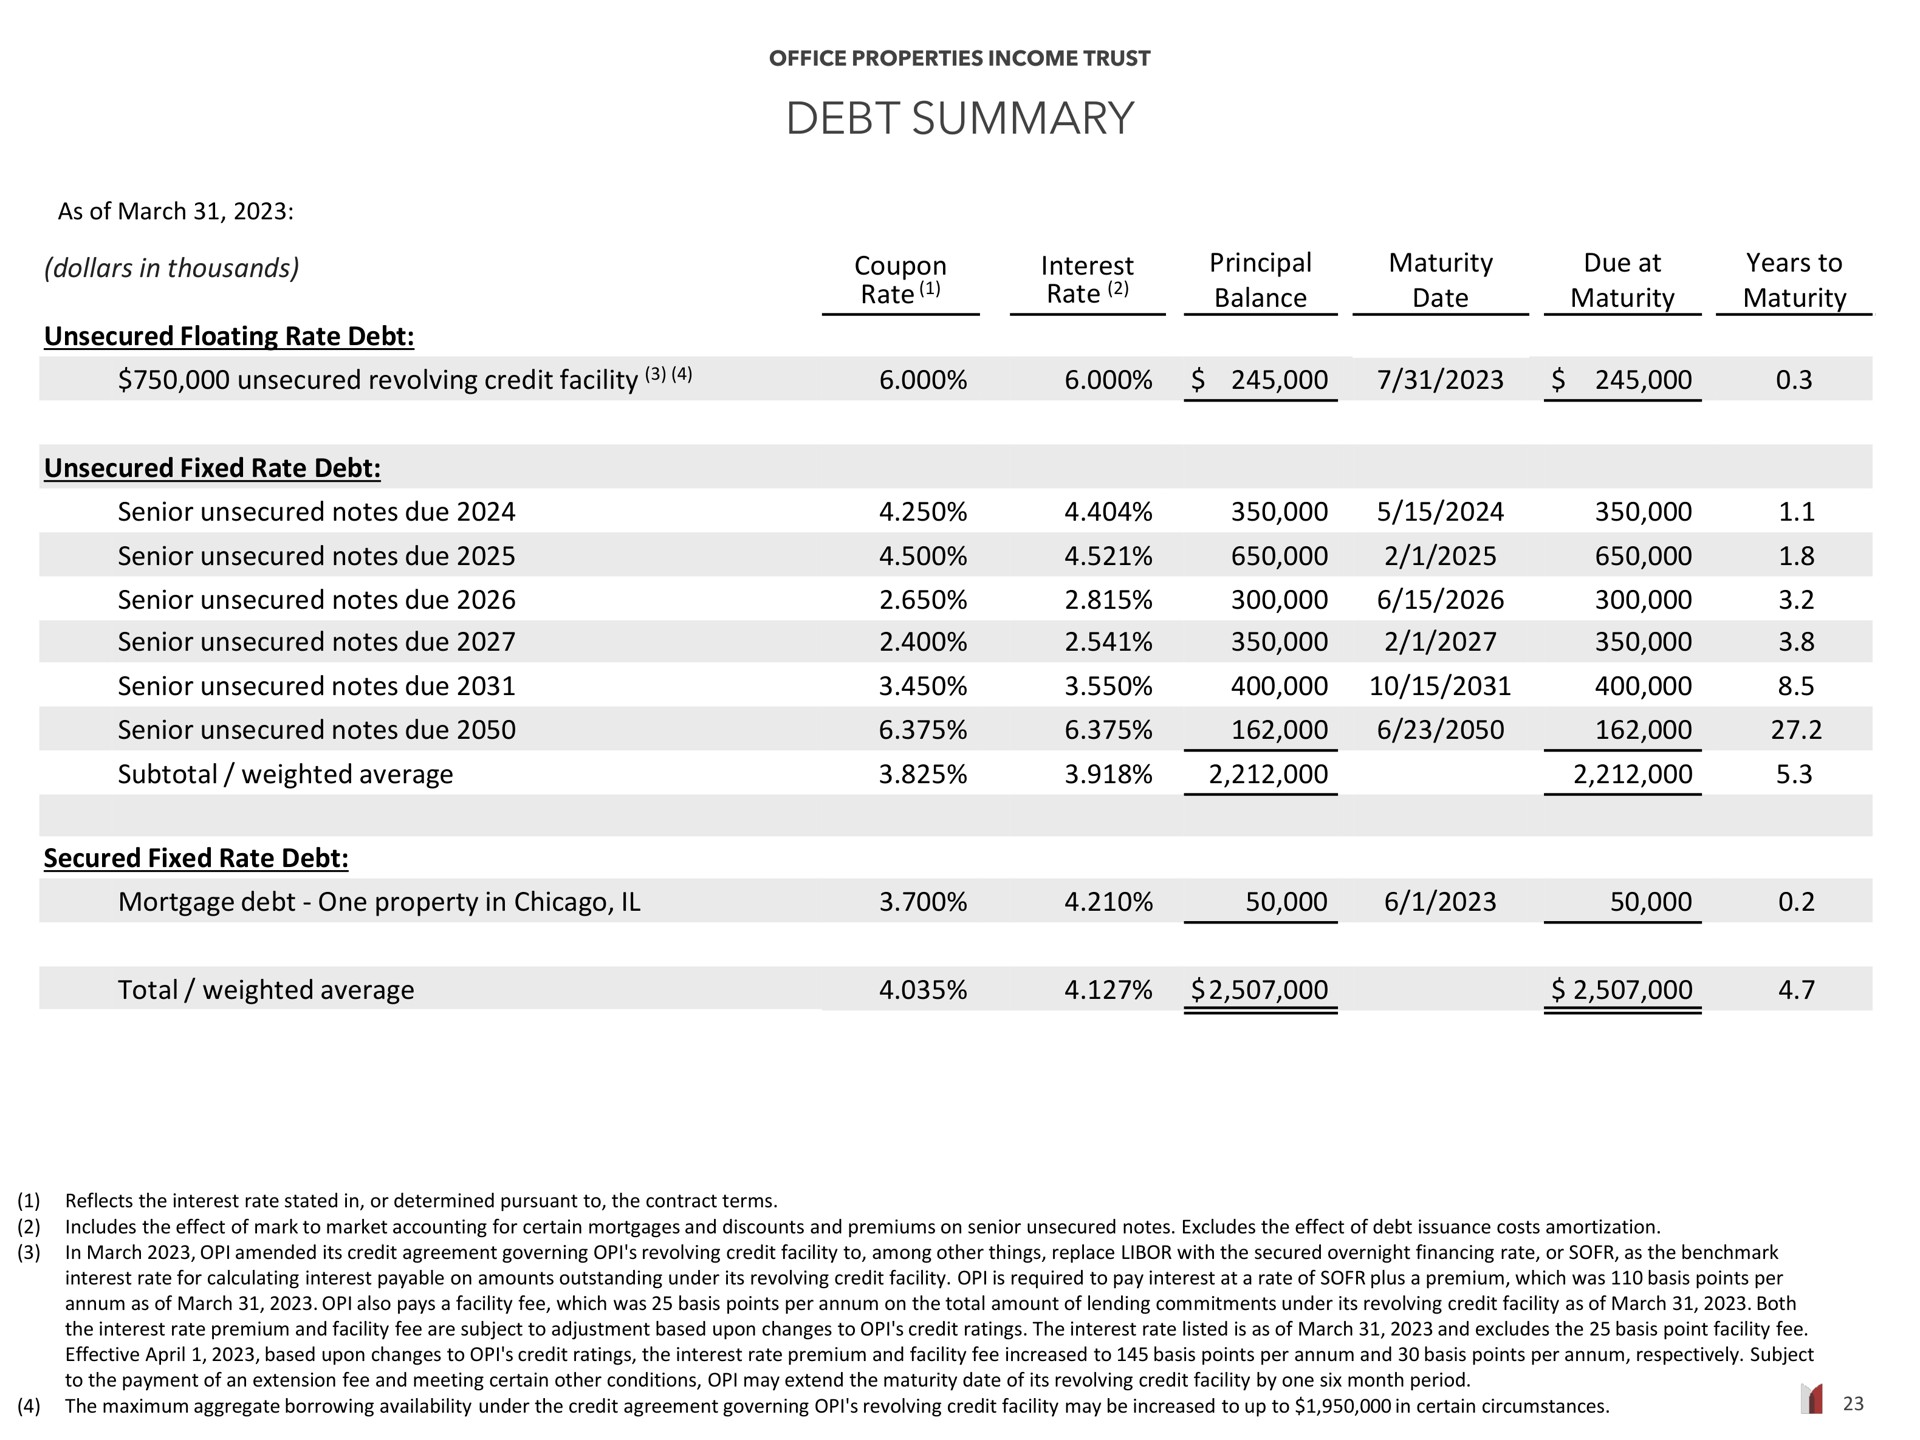 debt summary | Office Properties Income Trust